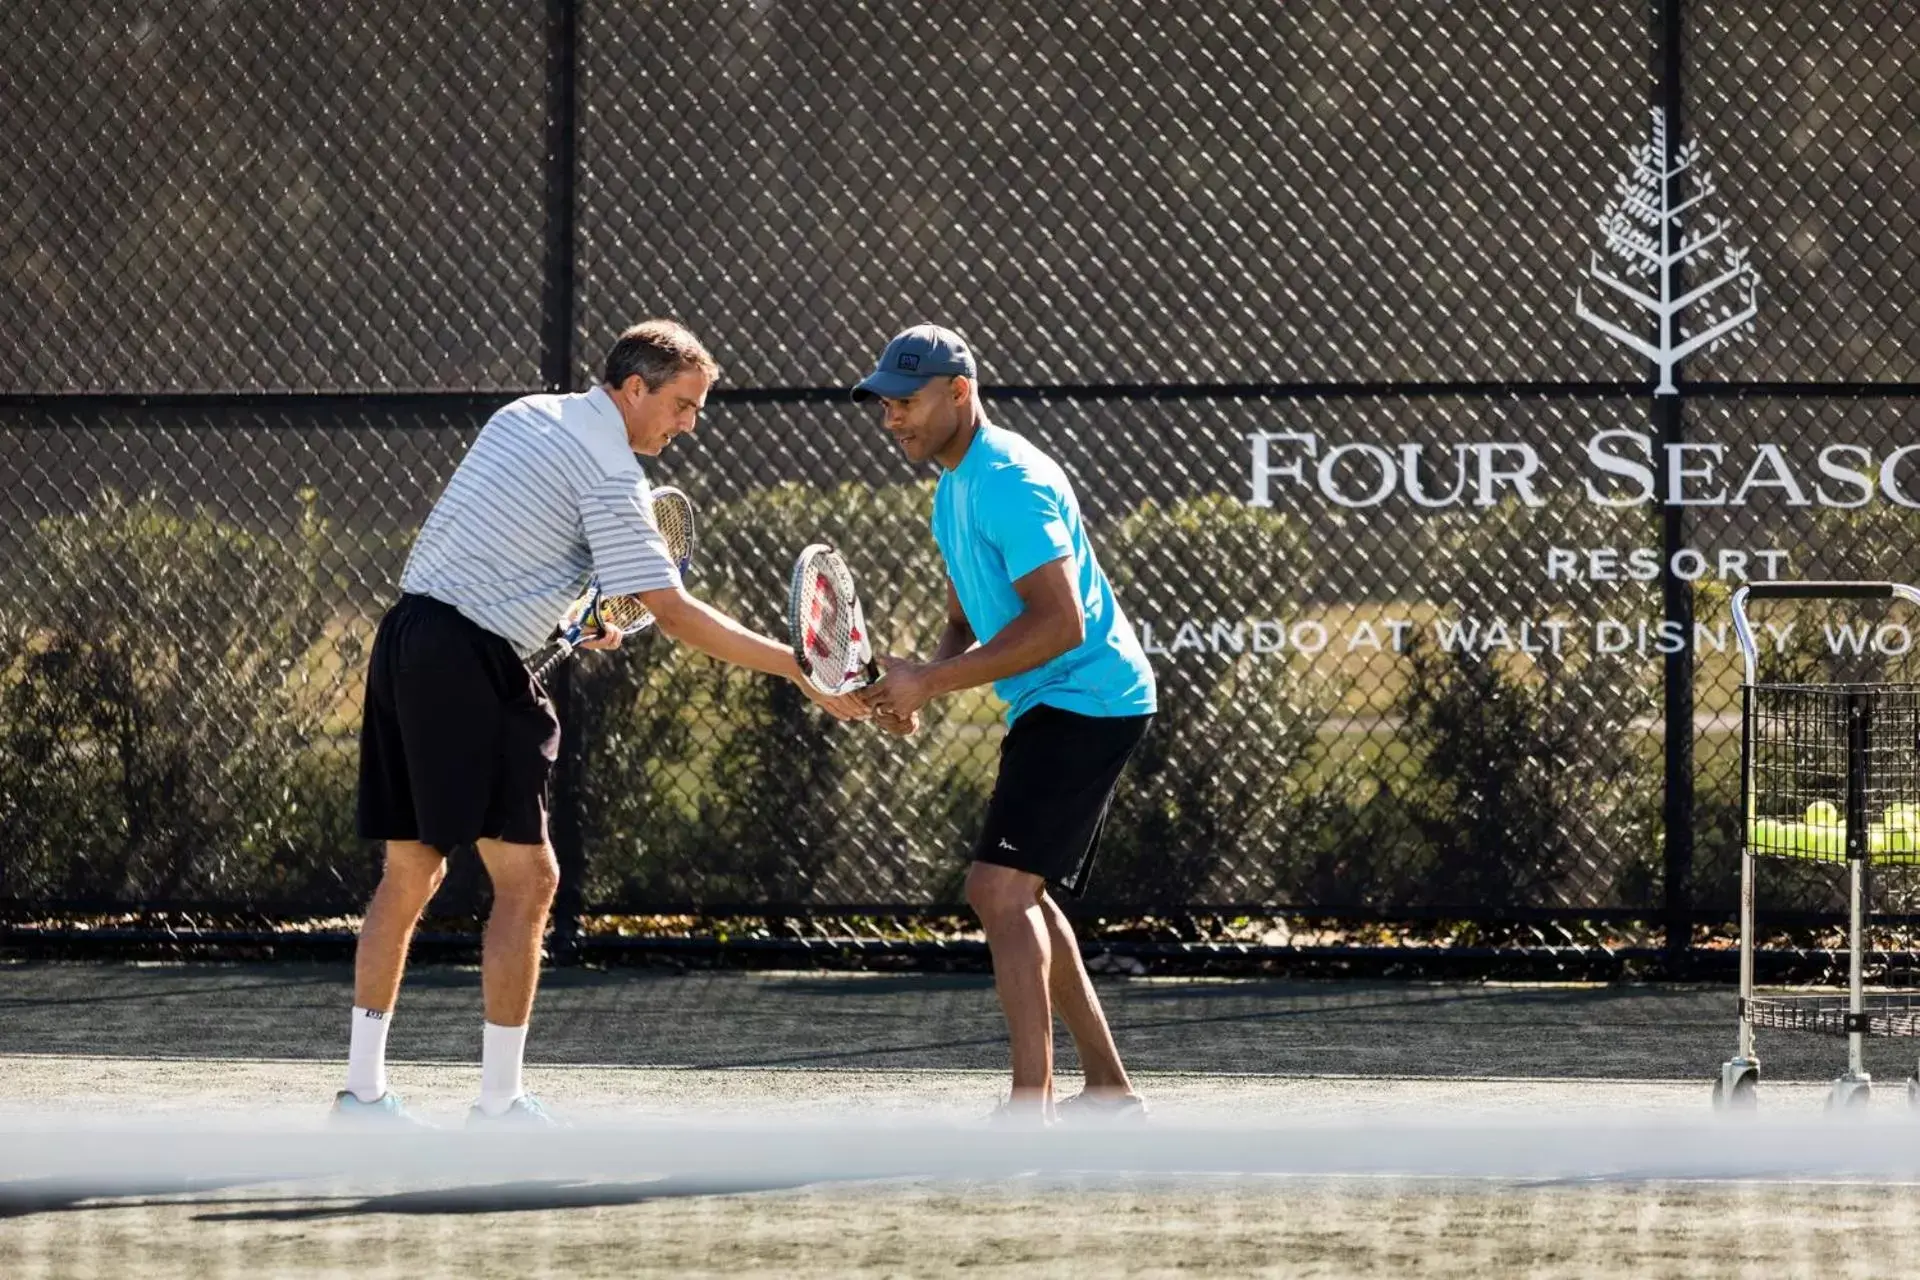 Tennis court in Four Seasons Resort Orlando at Walt Disney World Resort